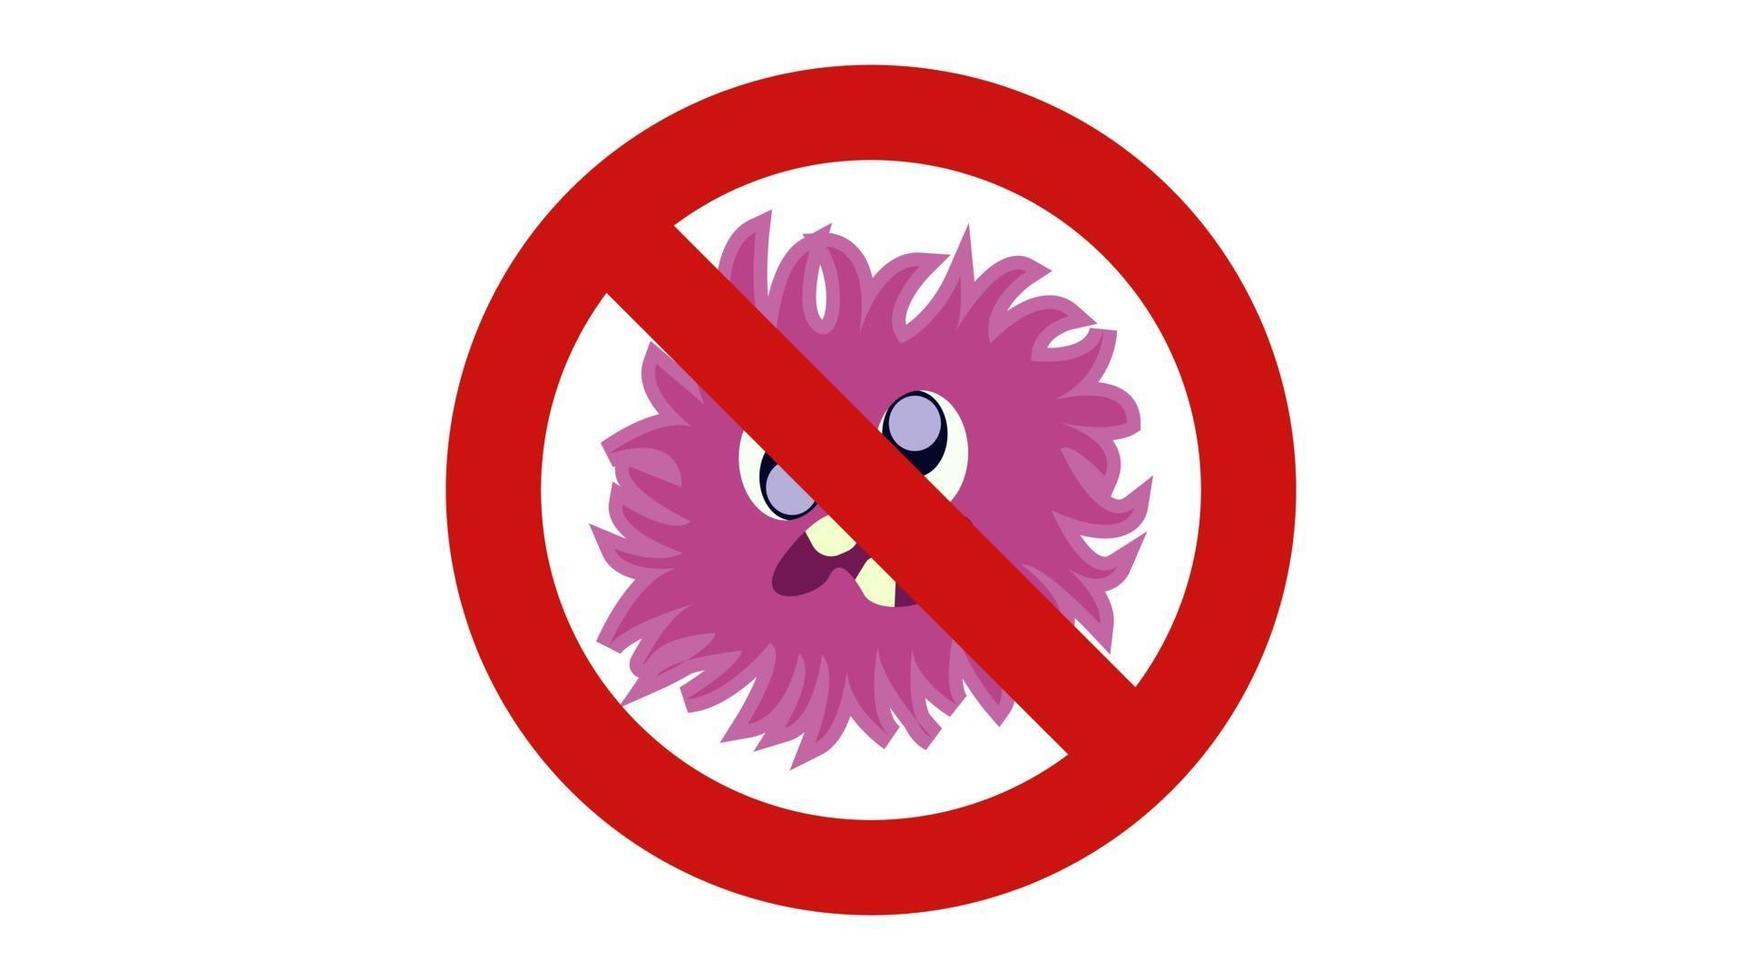 Illustration of no bacteria sign. Ban microbe and virus microorganism vector